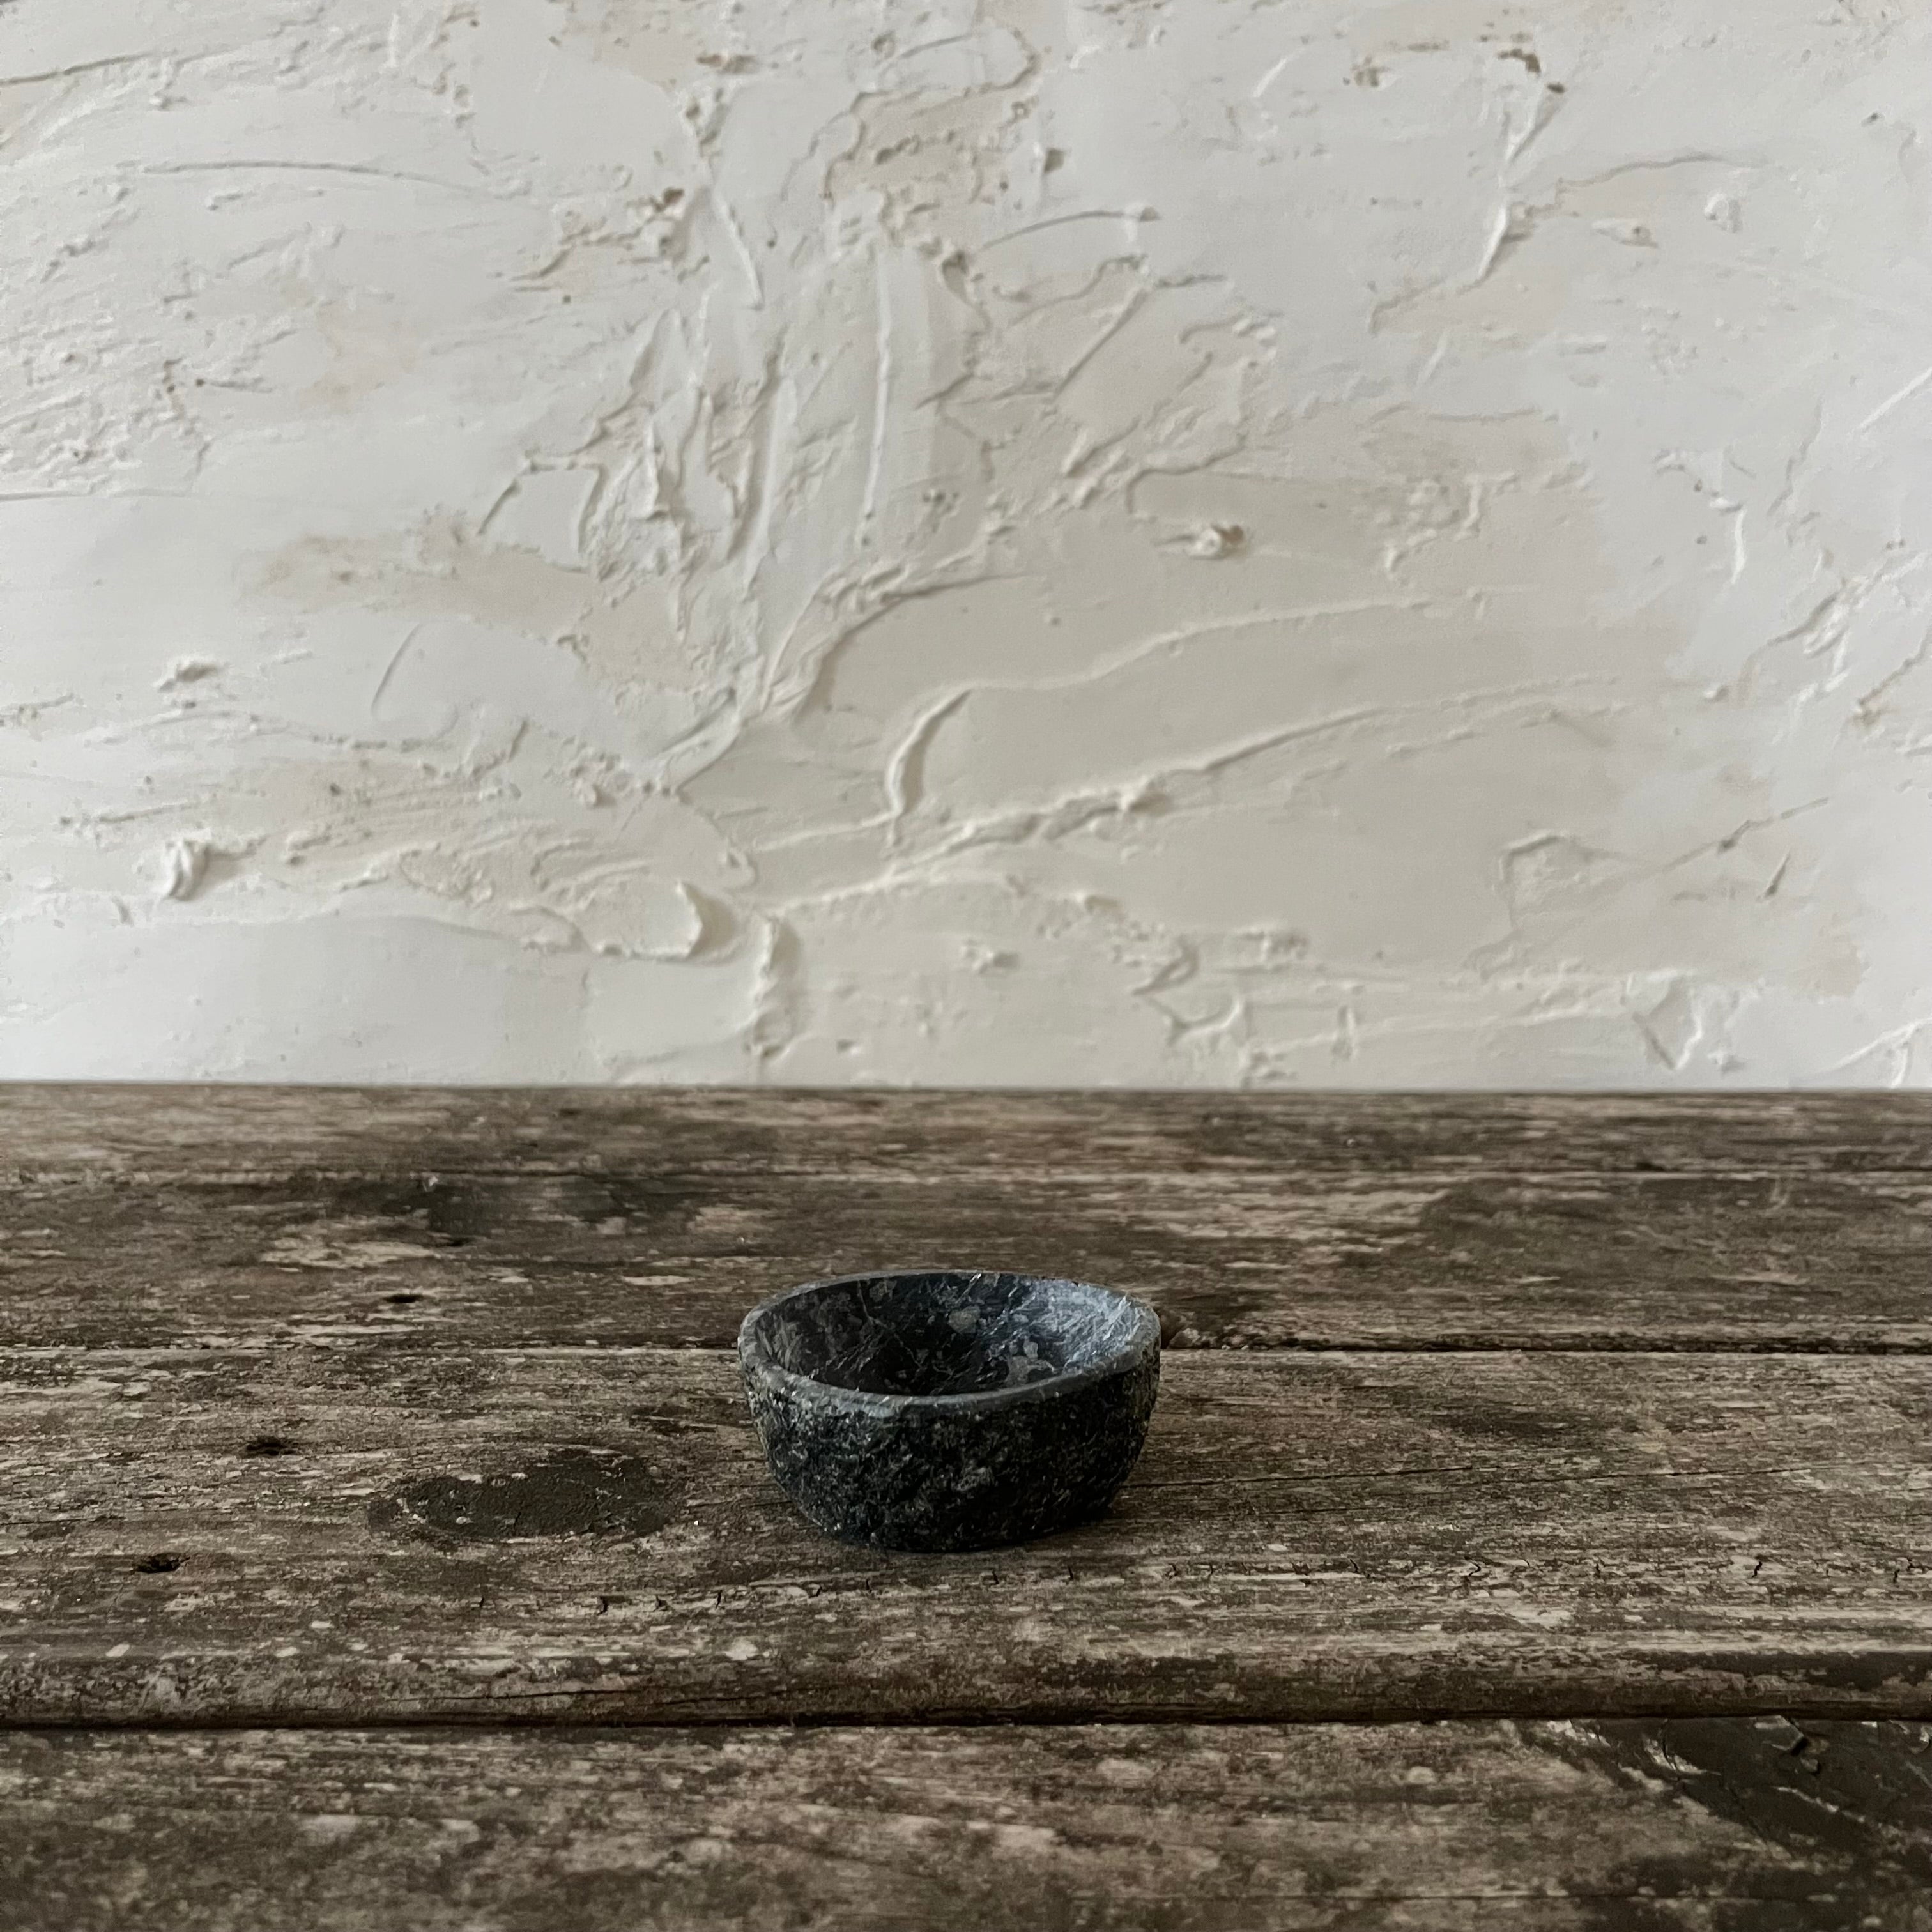 petite stone bowl